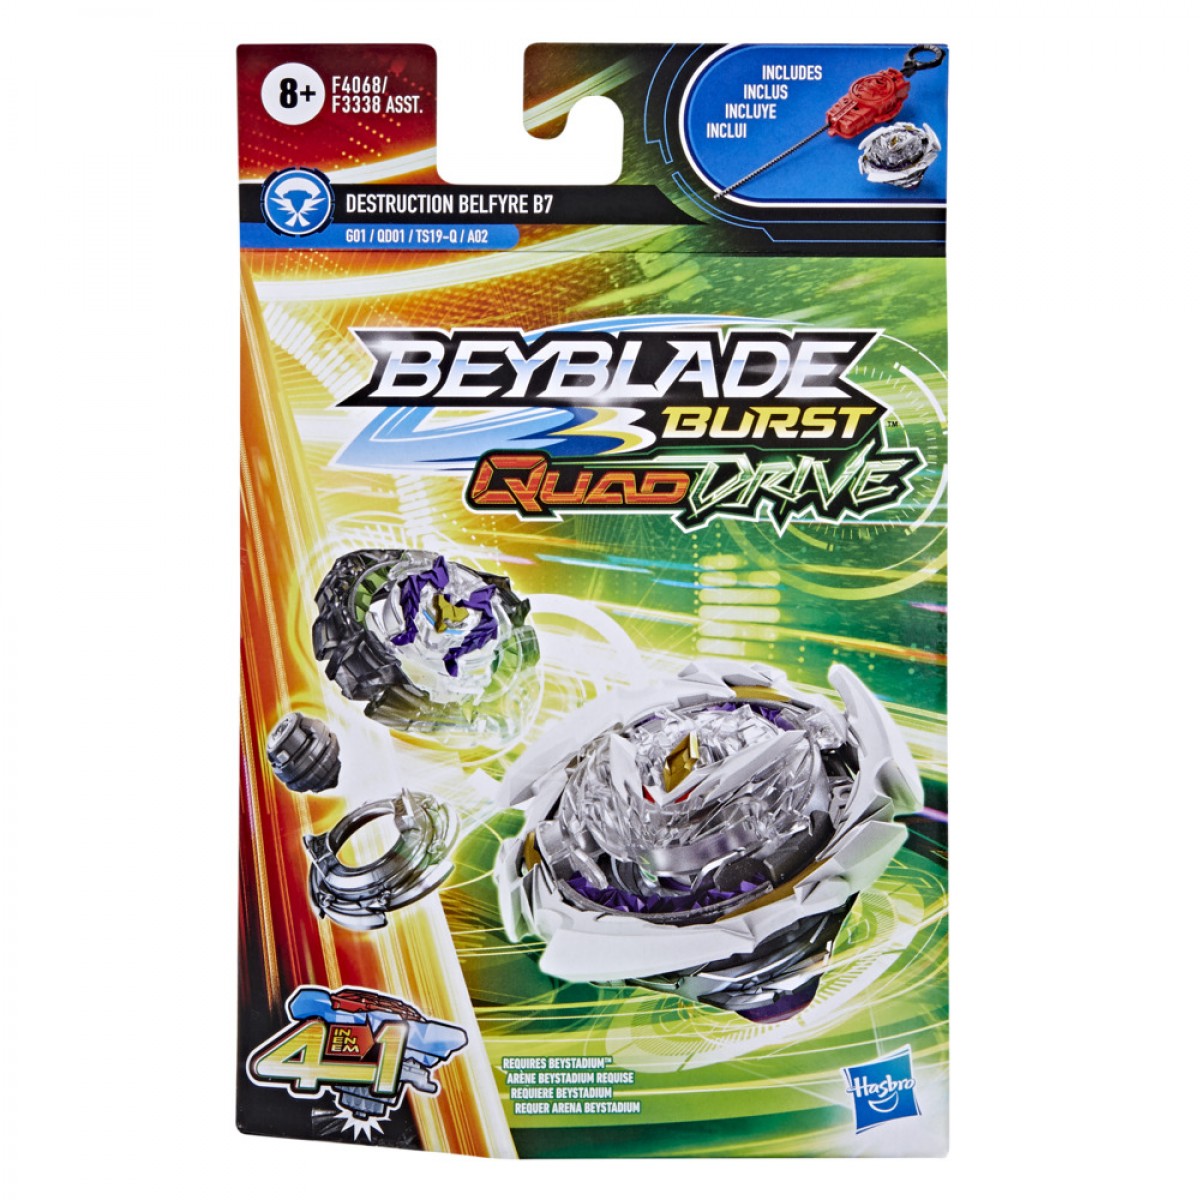 Beyblade Burst Quaddrive Destruction Belfyre B7 Spinning Top Starter Pack, 8Yrs+